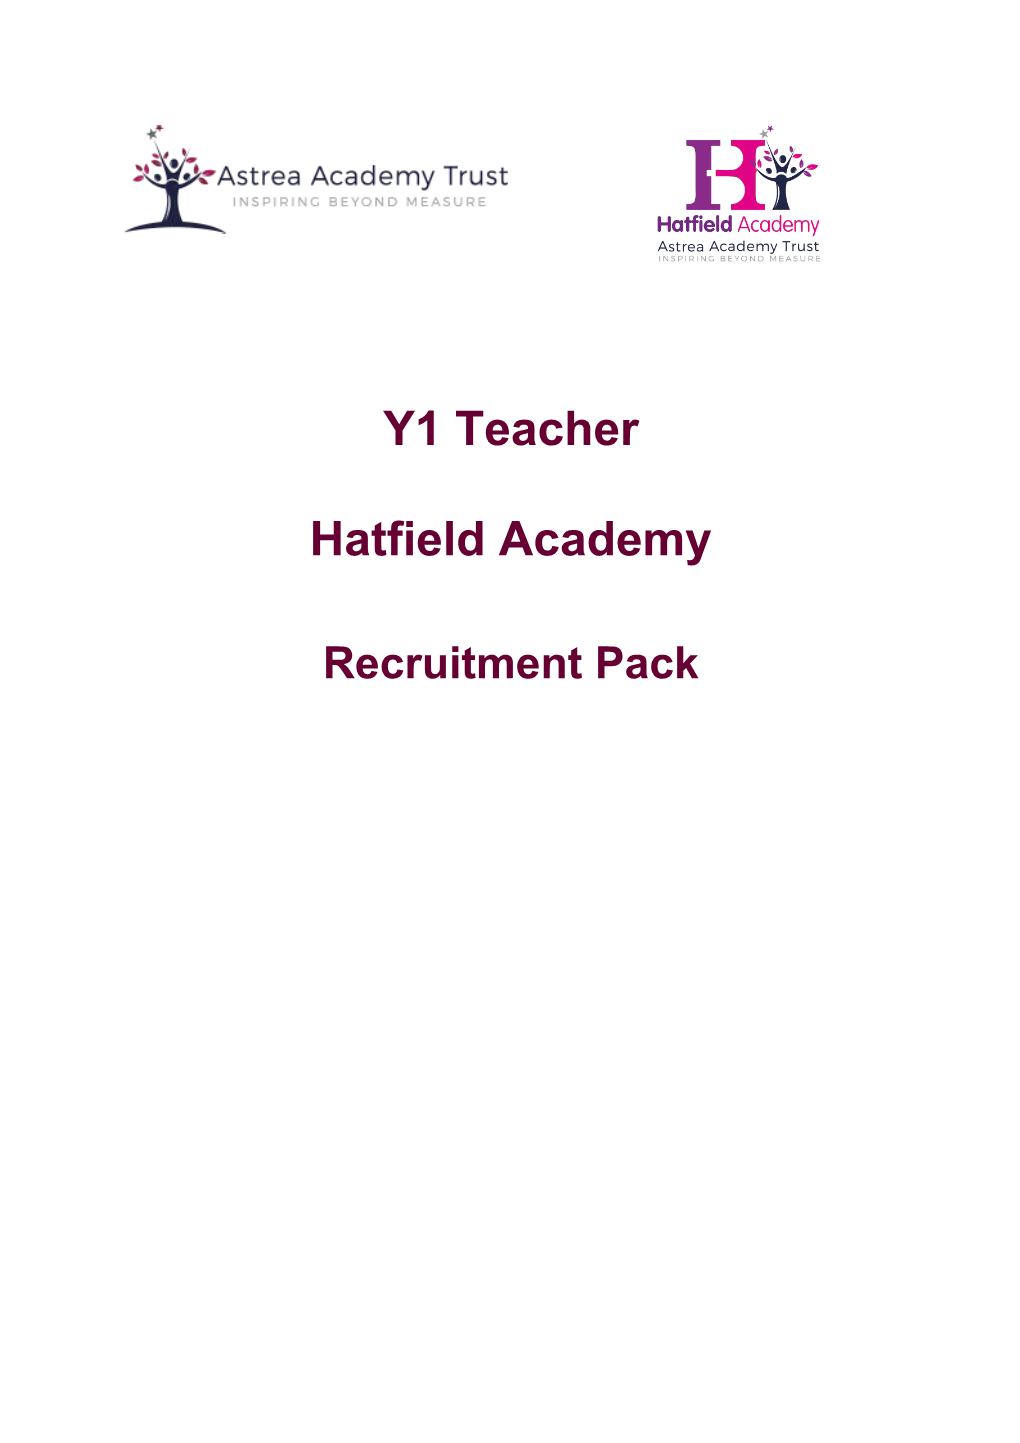 Hatfield Academy